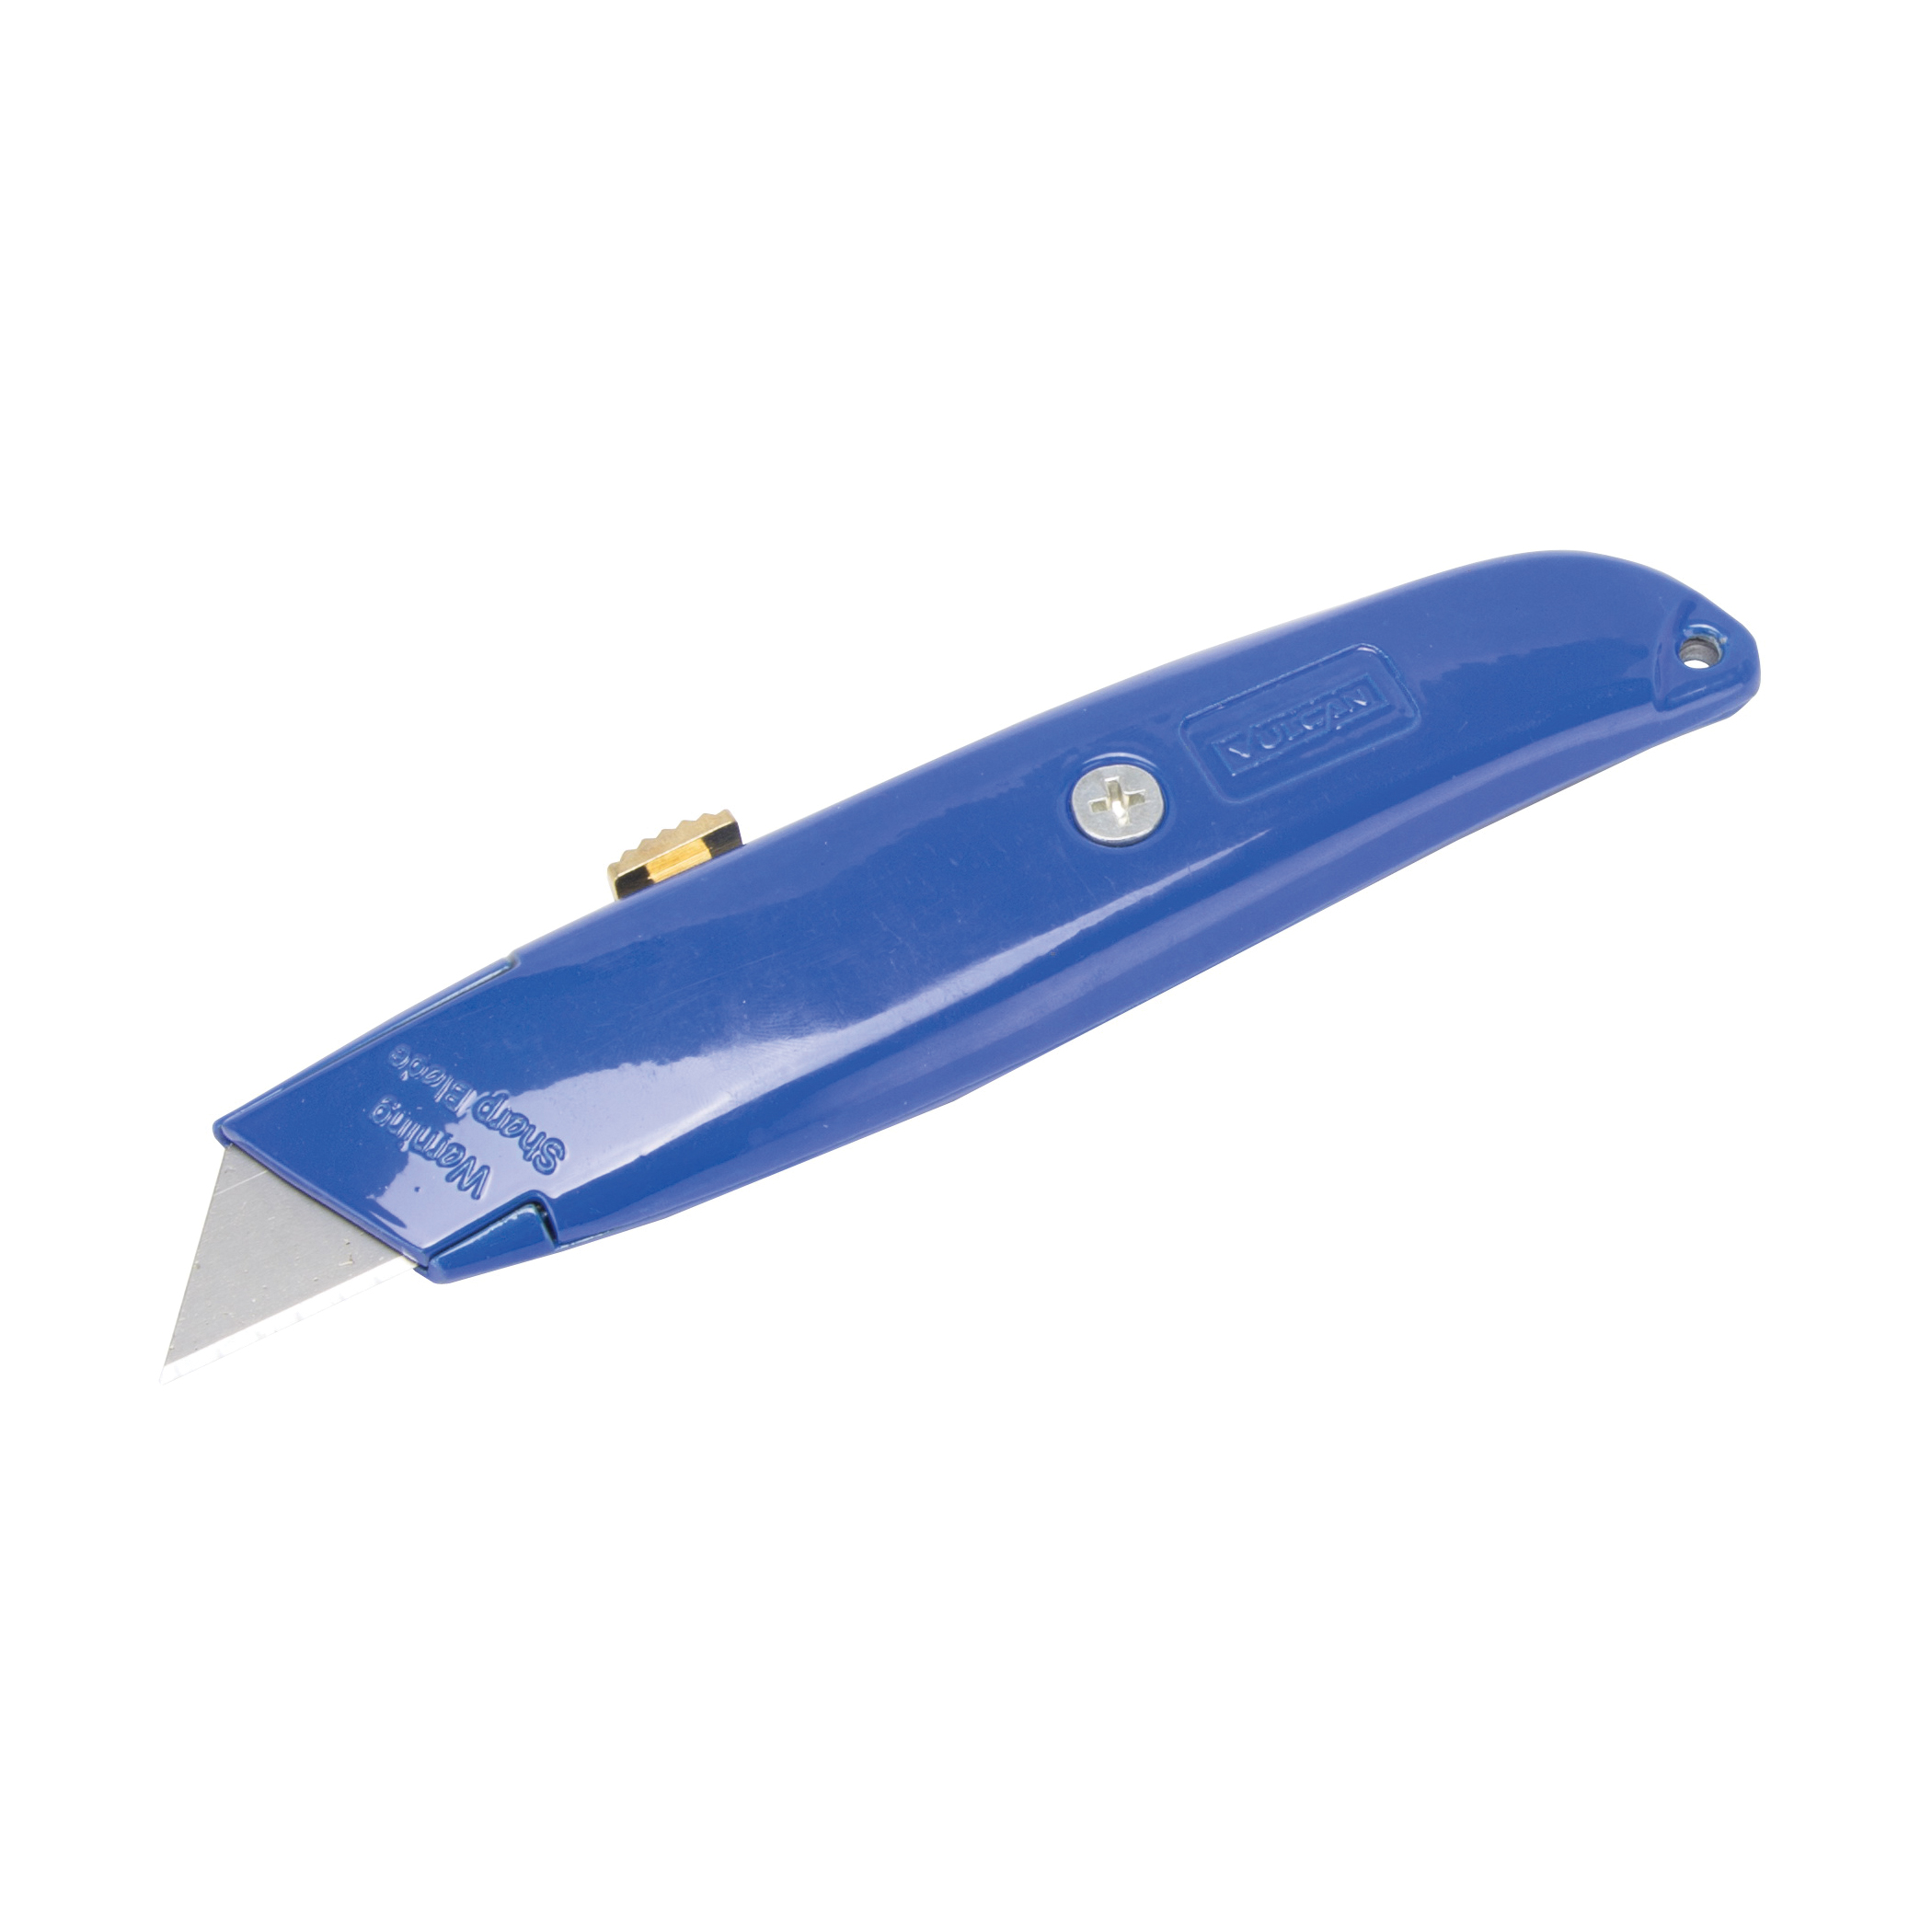 Vulcan JL54217 Utility Knife, 2-7/8 in L Blade, 1-1/4 in W Blade, Aluminum Handle, Blue Handle